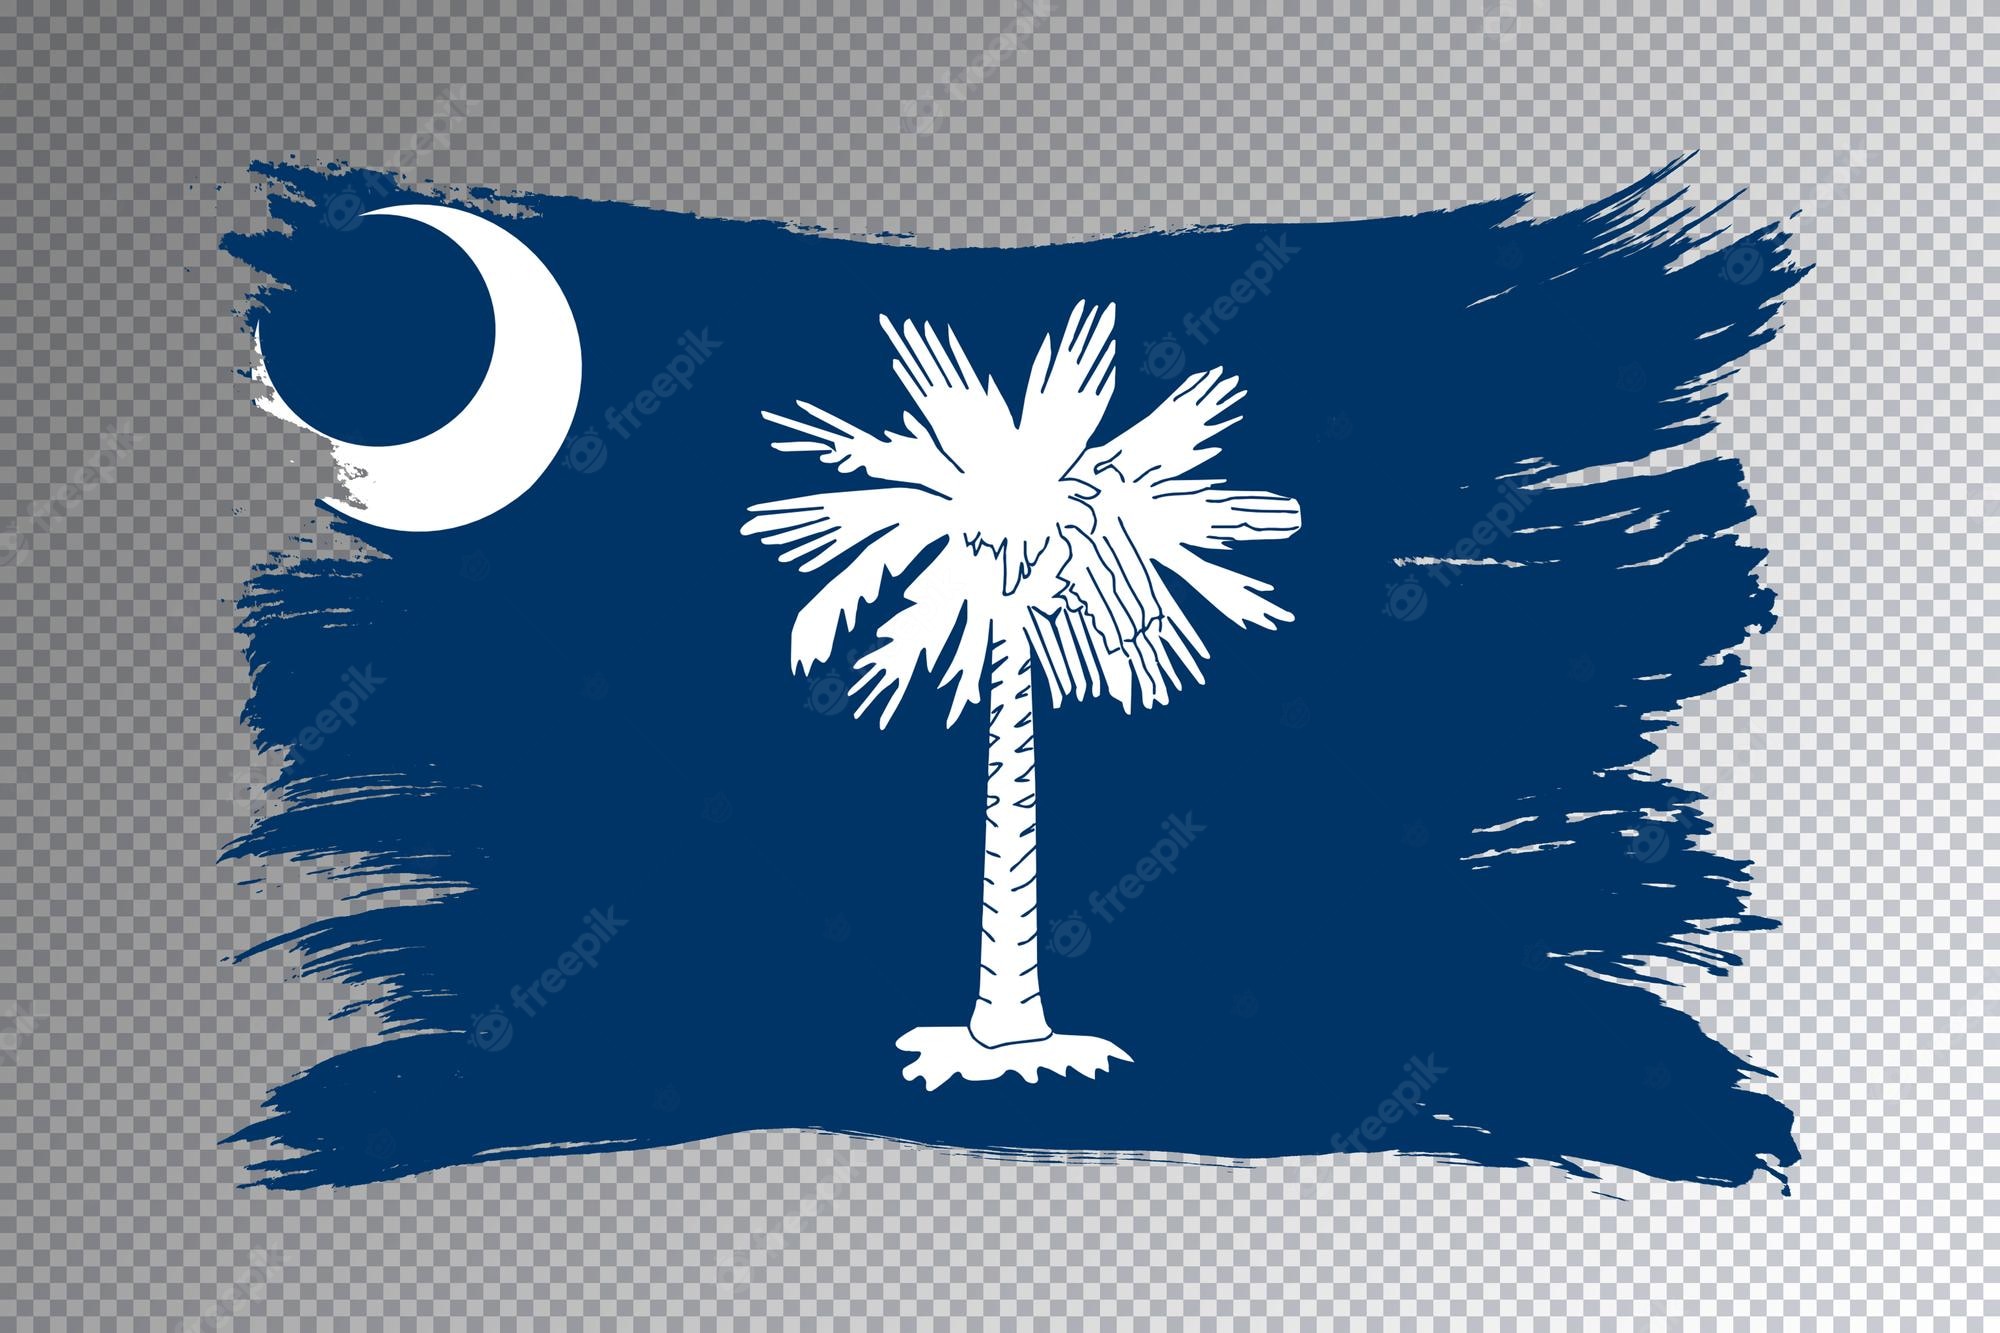 South Carolina State Wallpapers